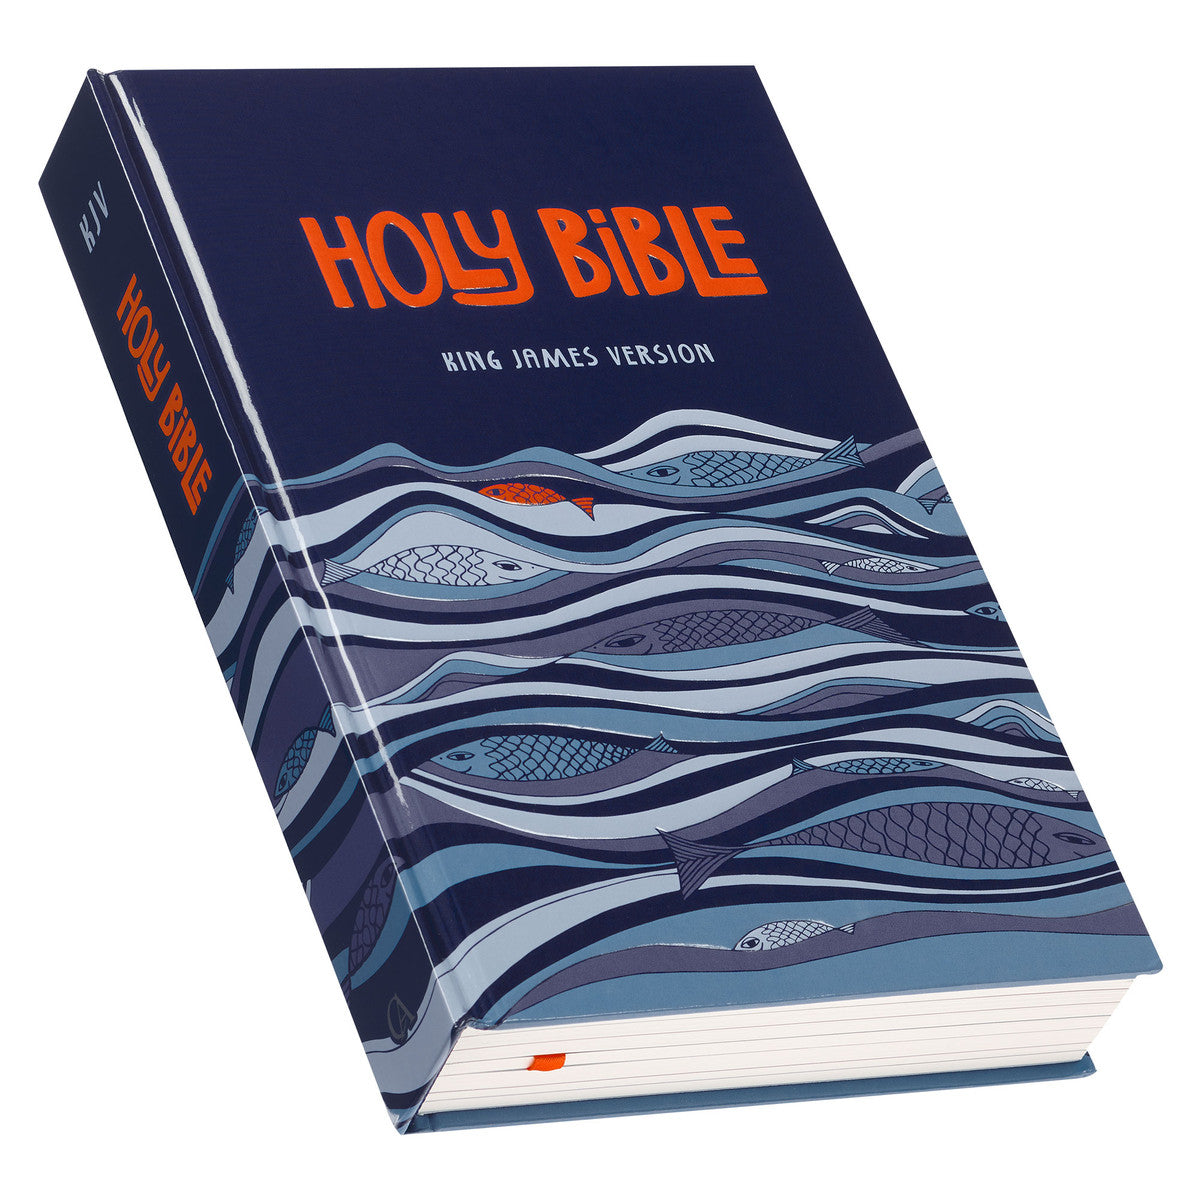 Blue Hardcover Kid's King James Version Bible